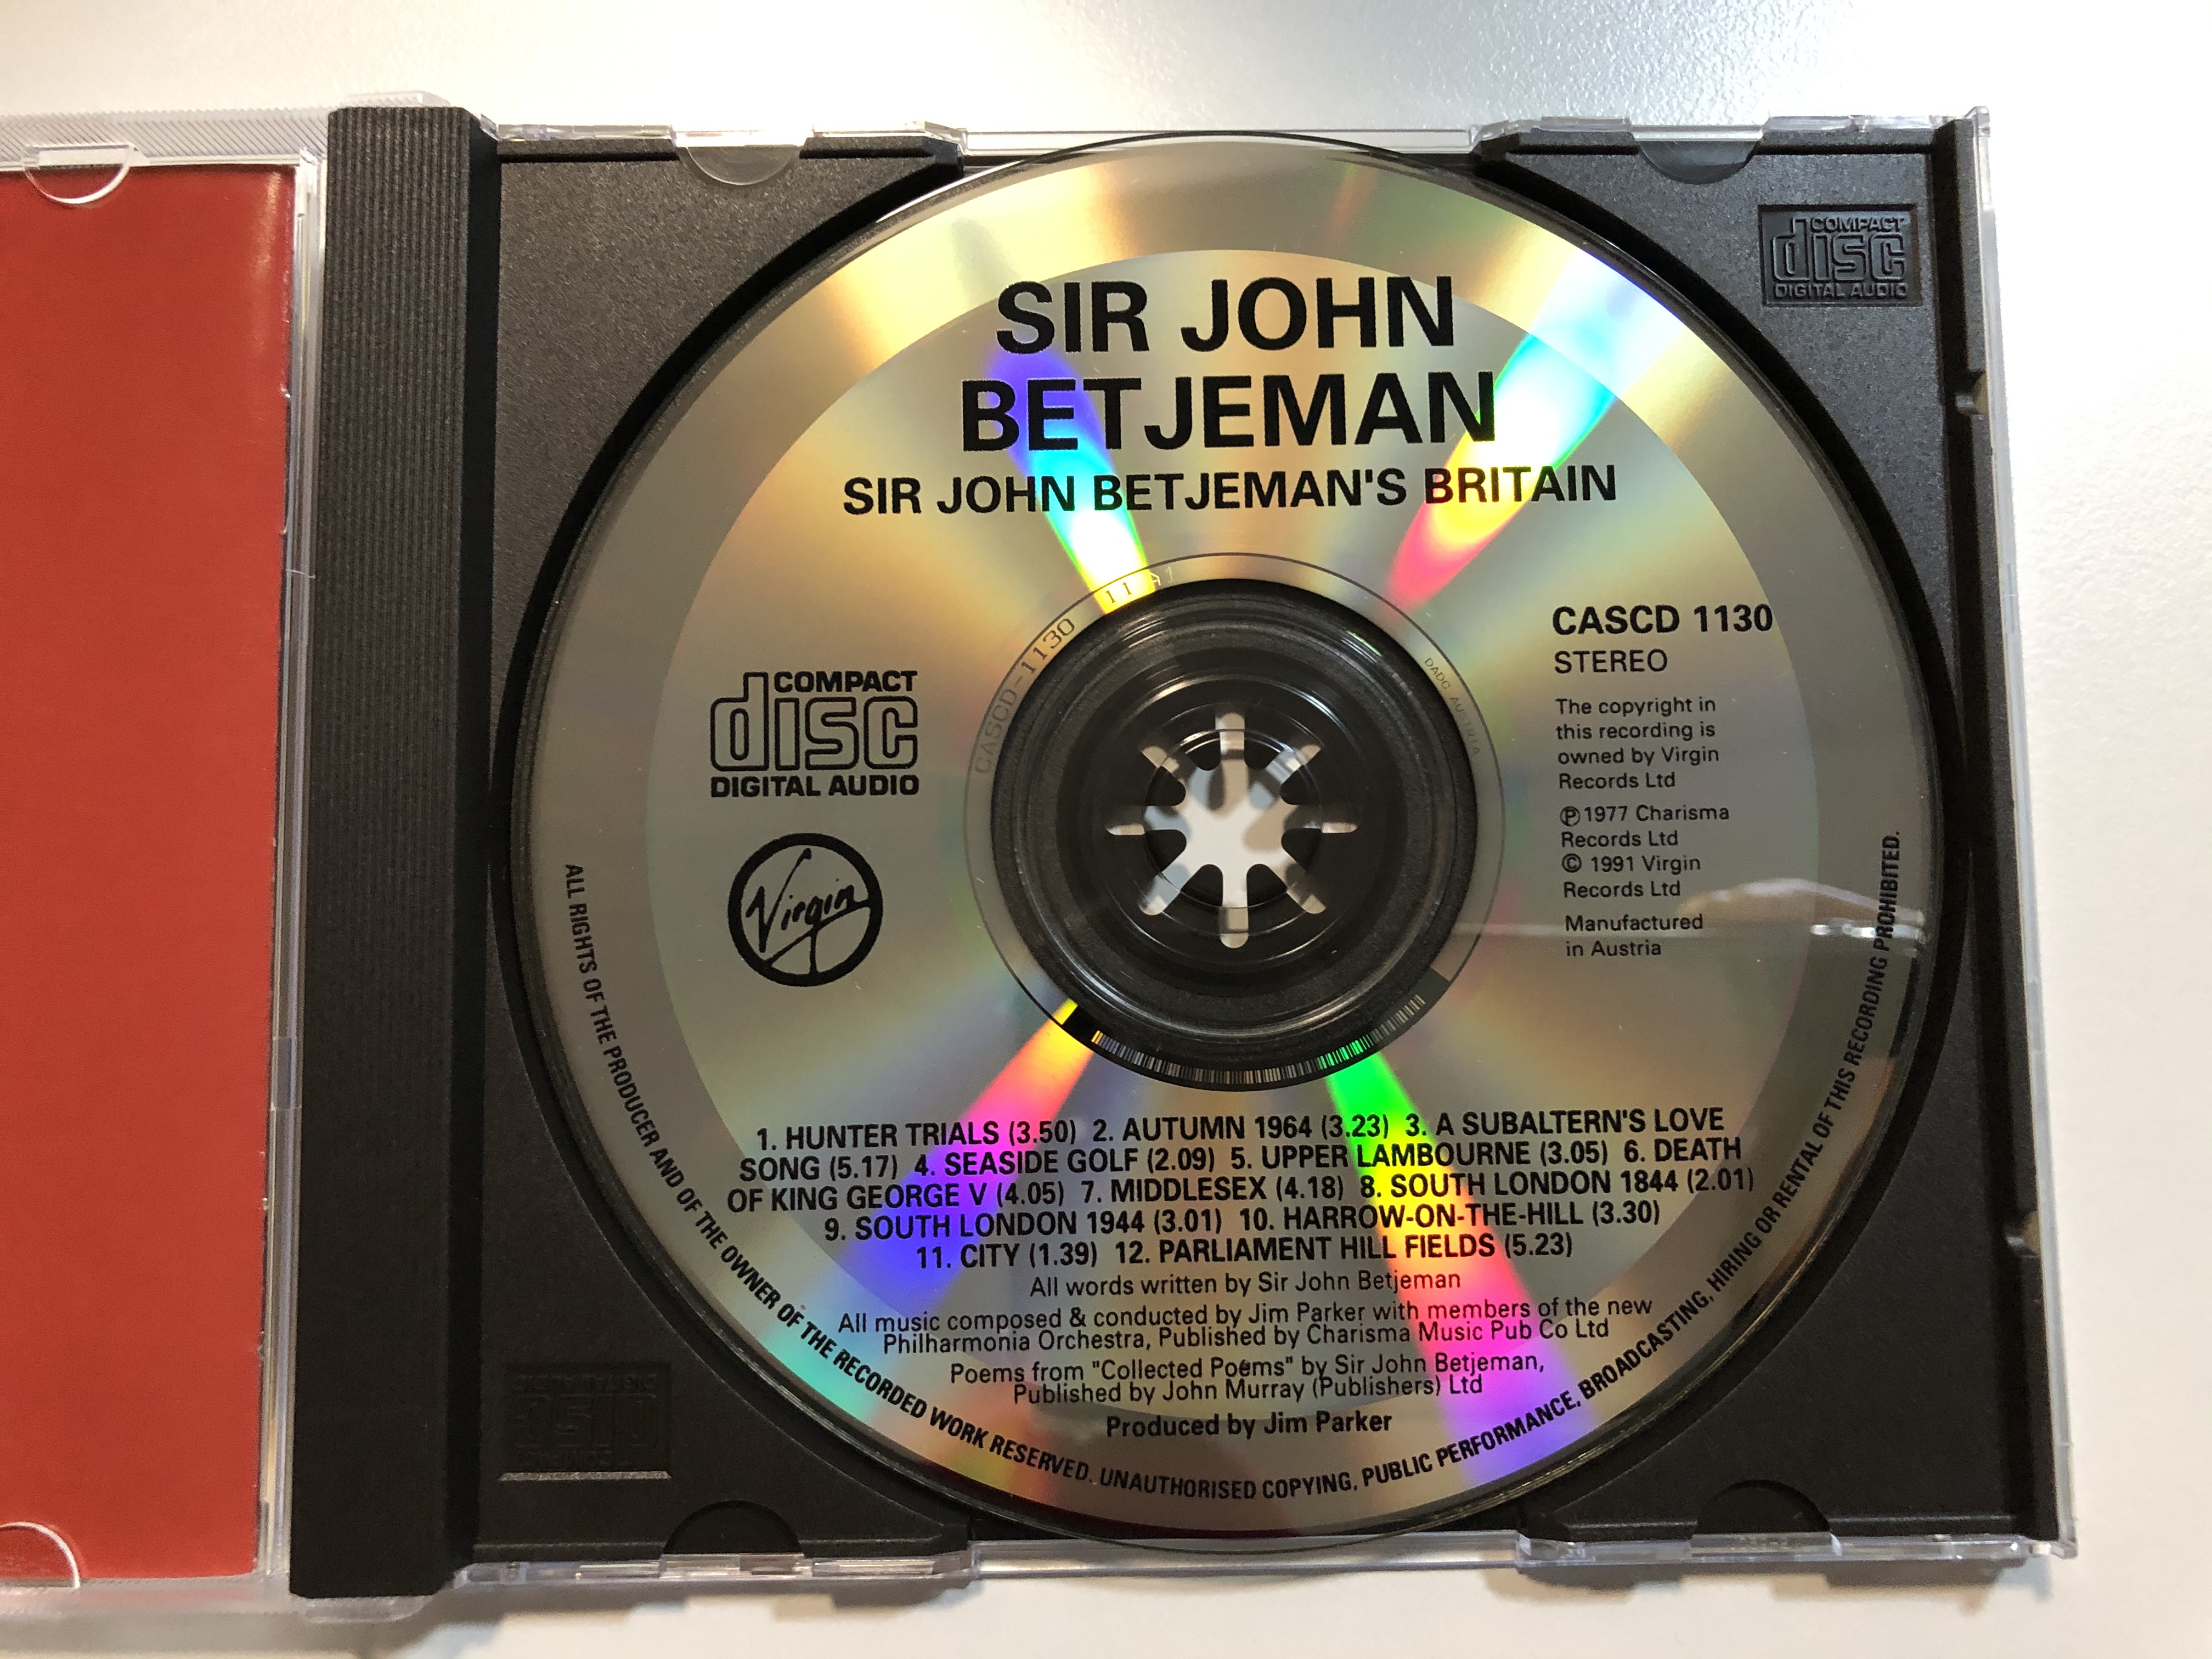 sir-john-betjeman-s-britain-music-by-jim-parker-virgin-records-audio-cd-1991-stereo-cascd-1130-6-.jpg